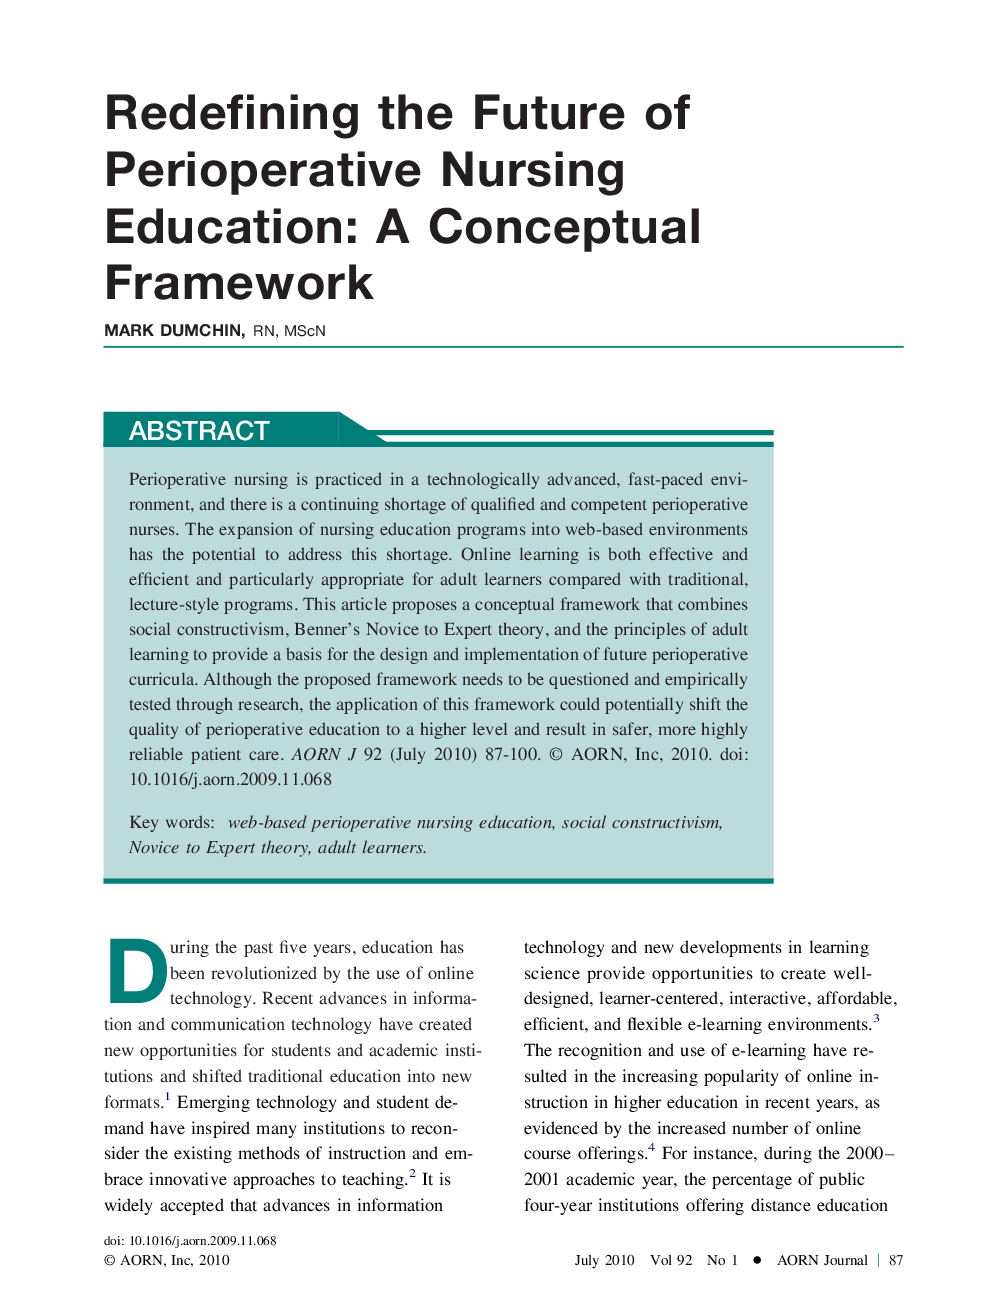 Redefining the Future of Perioperative Nursing Education: A Conceptual Framework